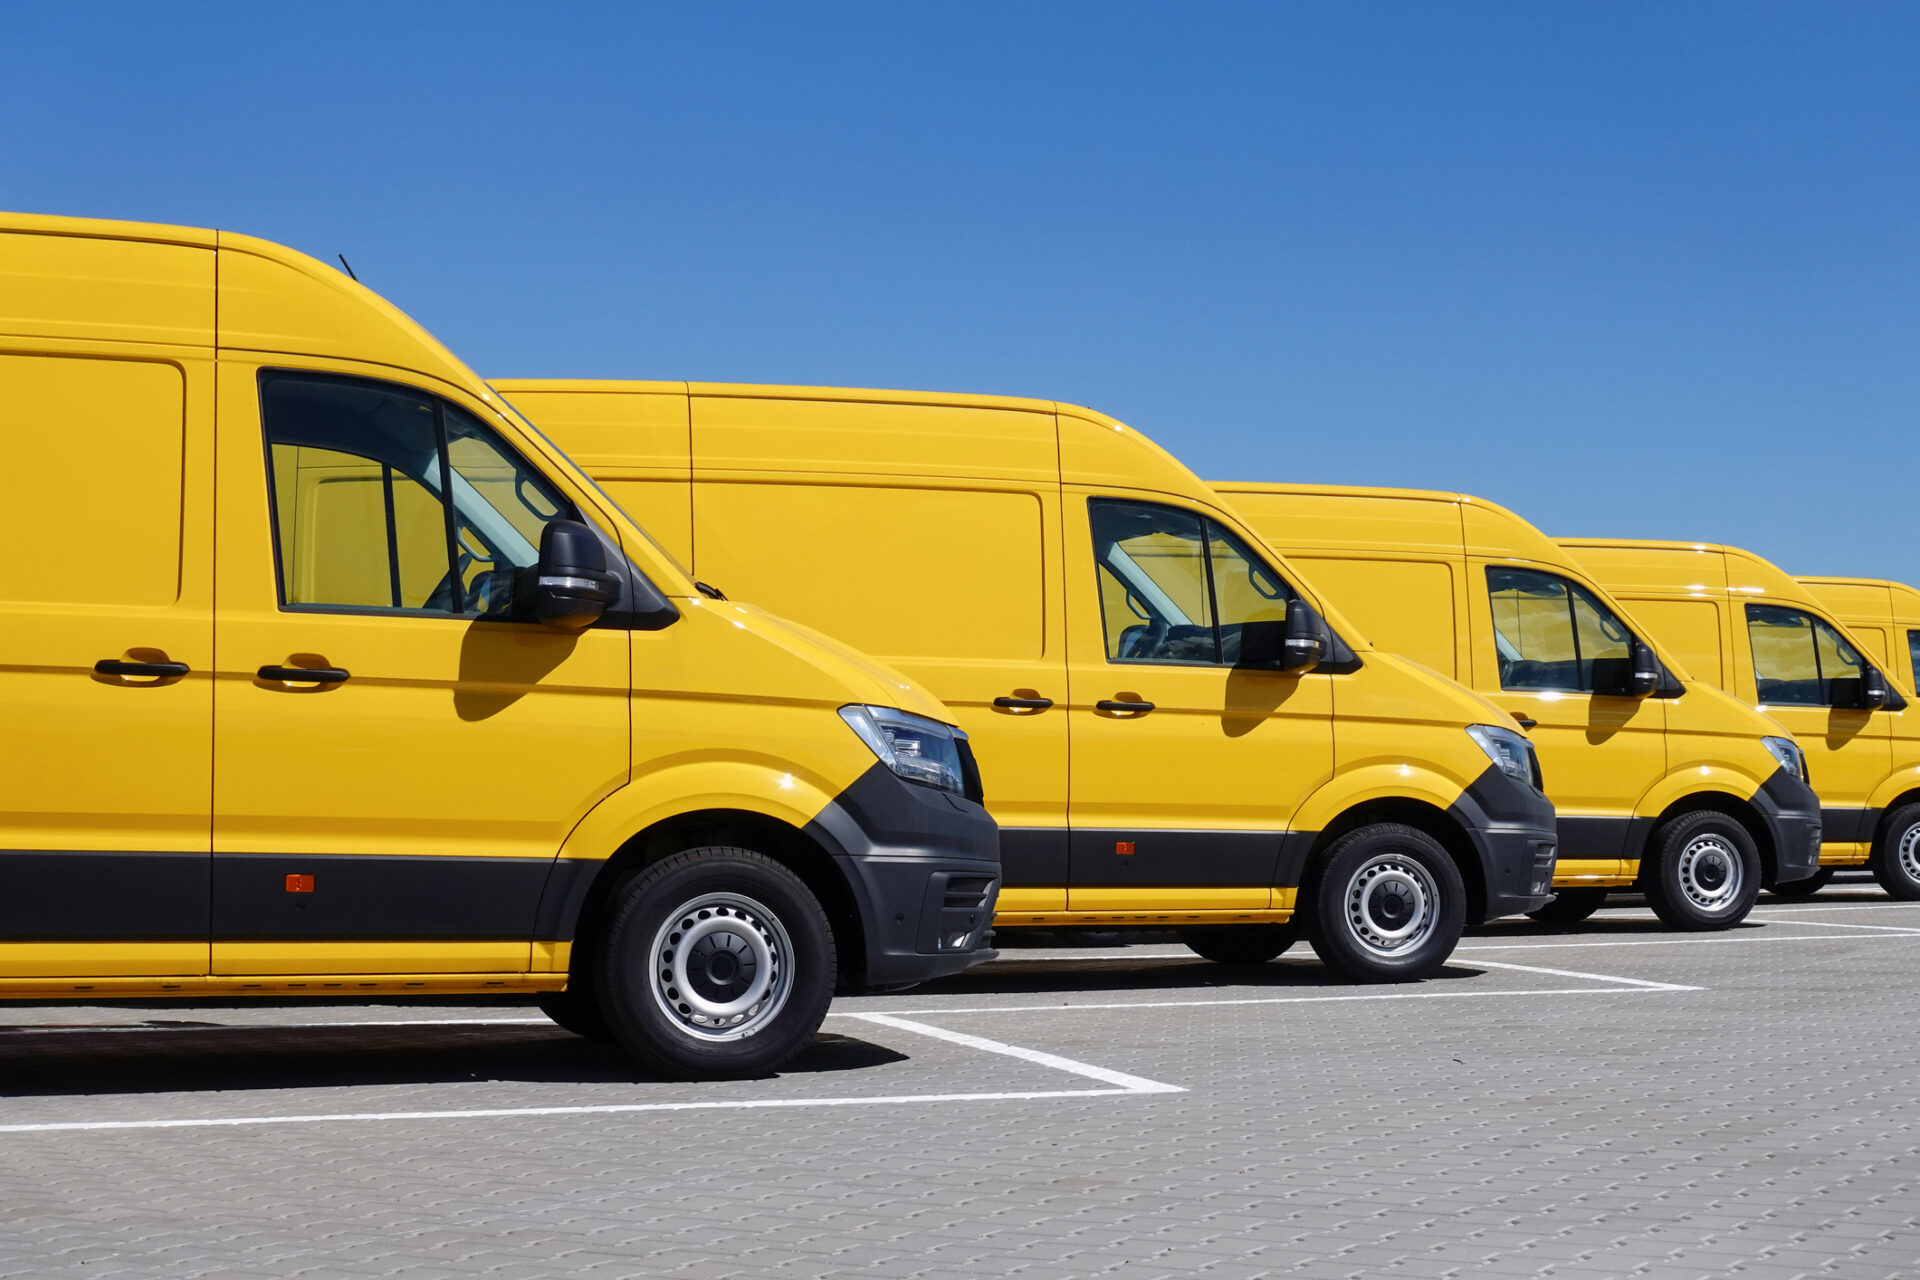 Yellow Delivery Vans